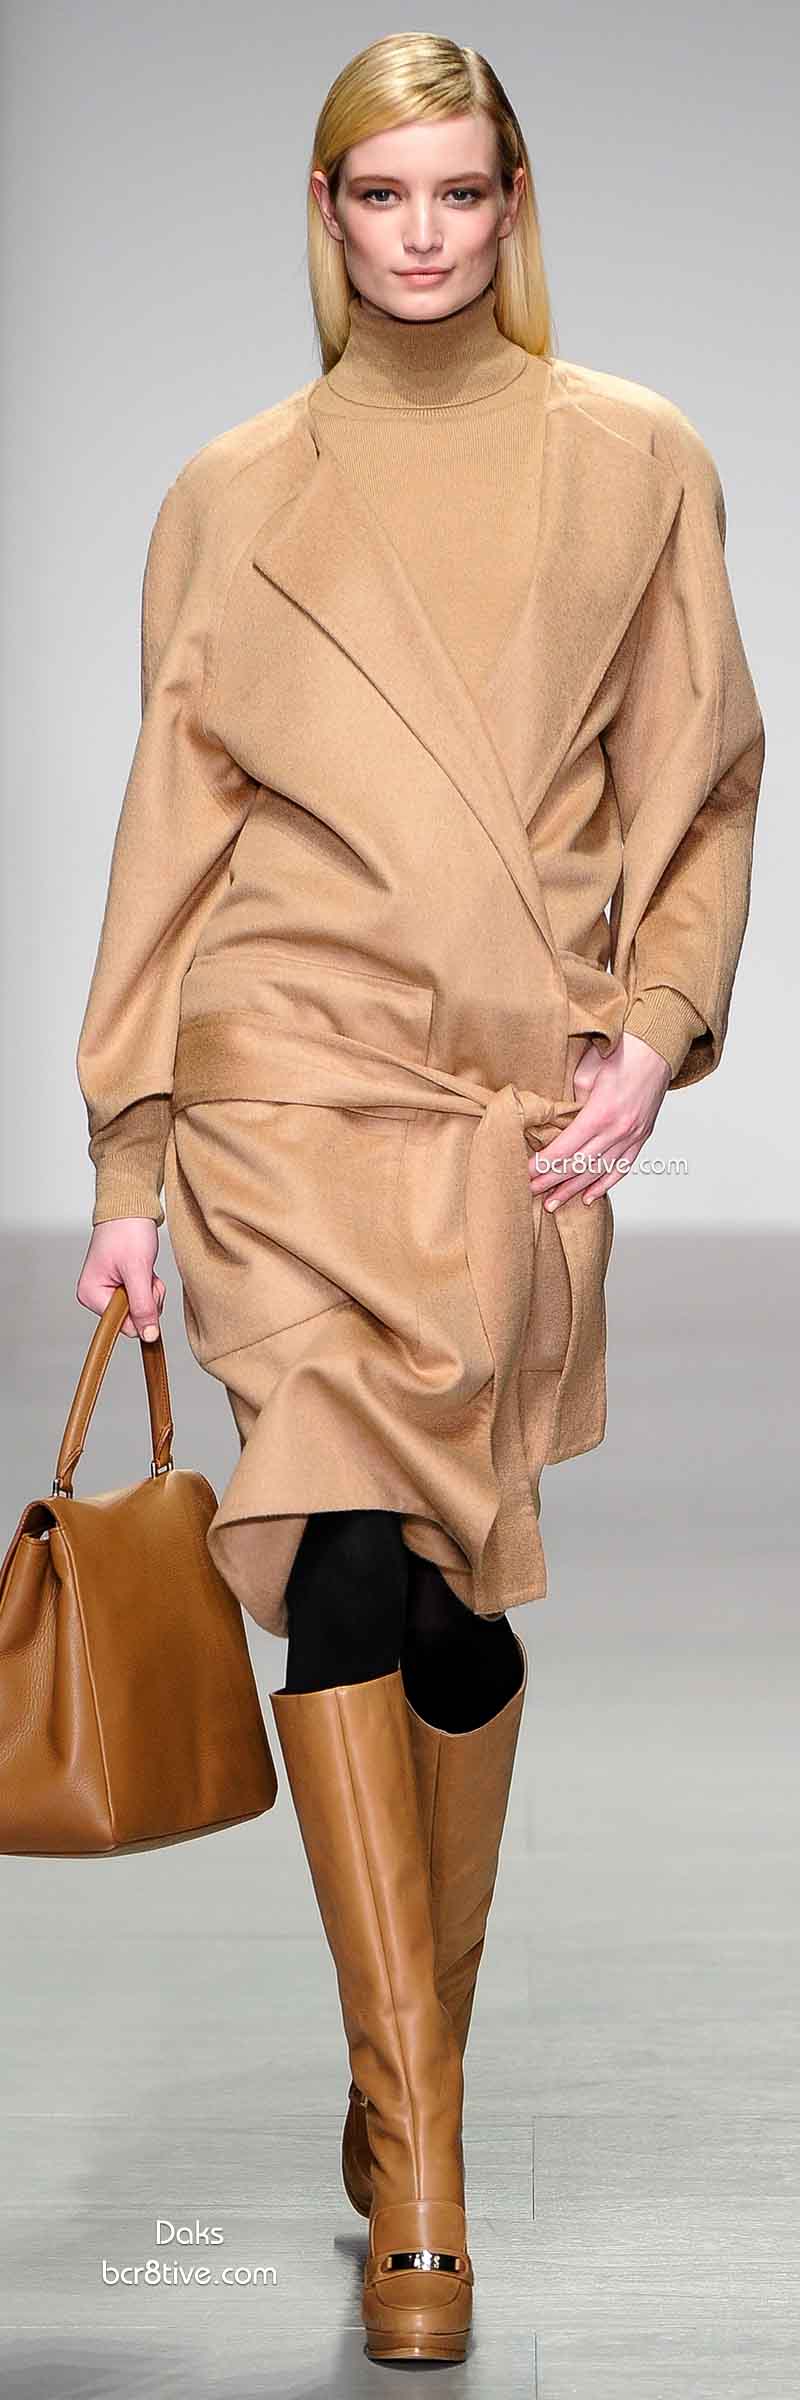 Fall 2014 Menswear Inspired Fashion - Daks